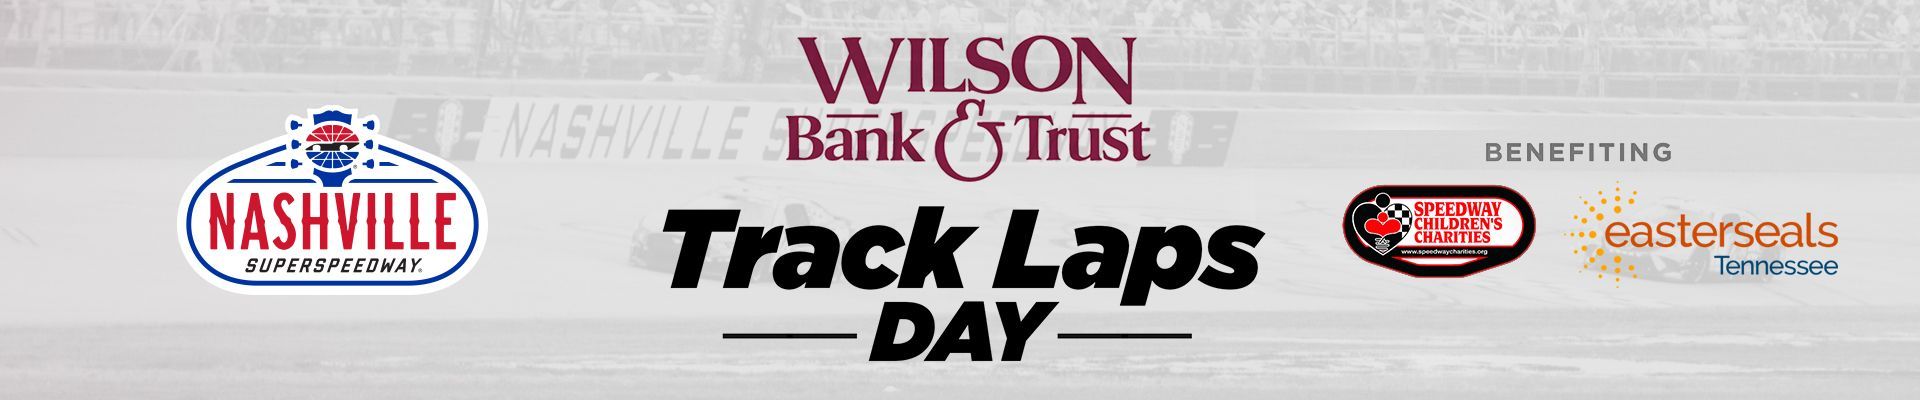 Wilson Bank & Trust Track Laps Day Registration Header